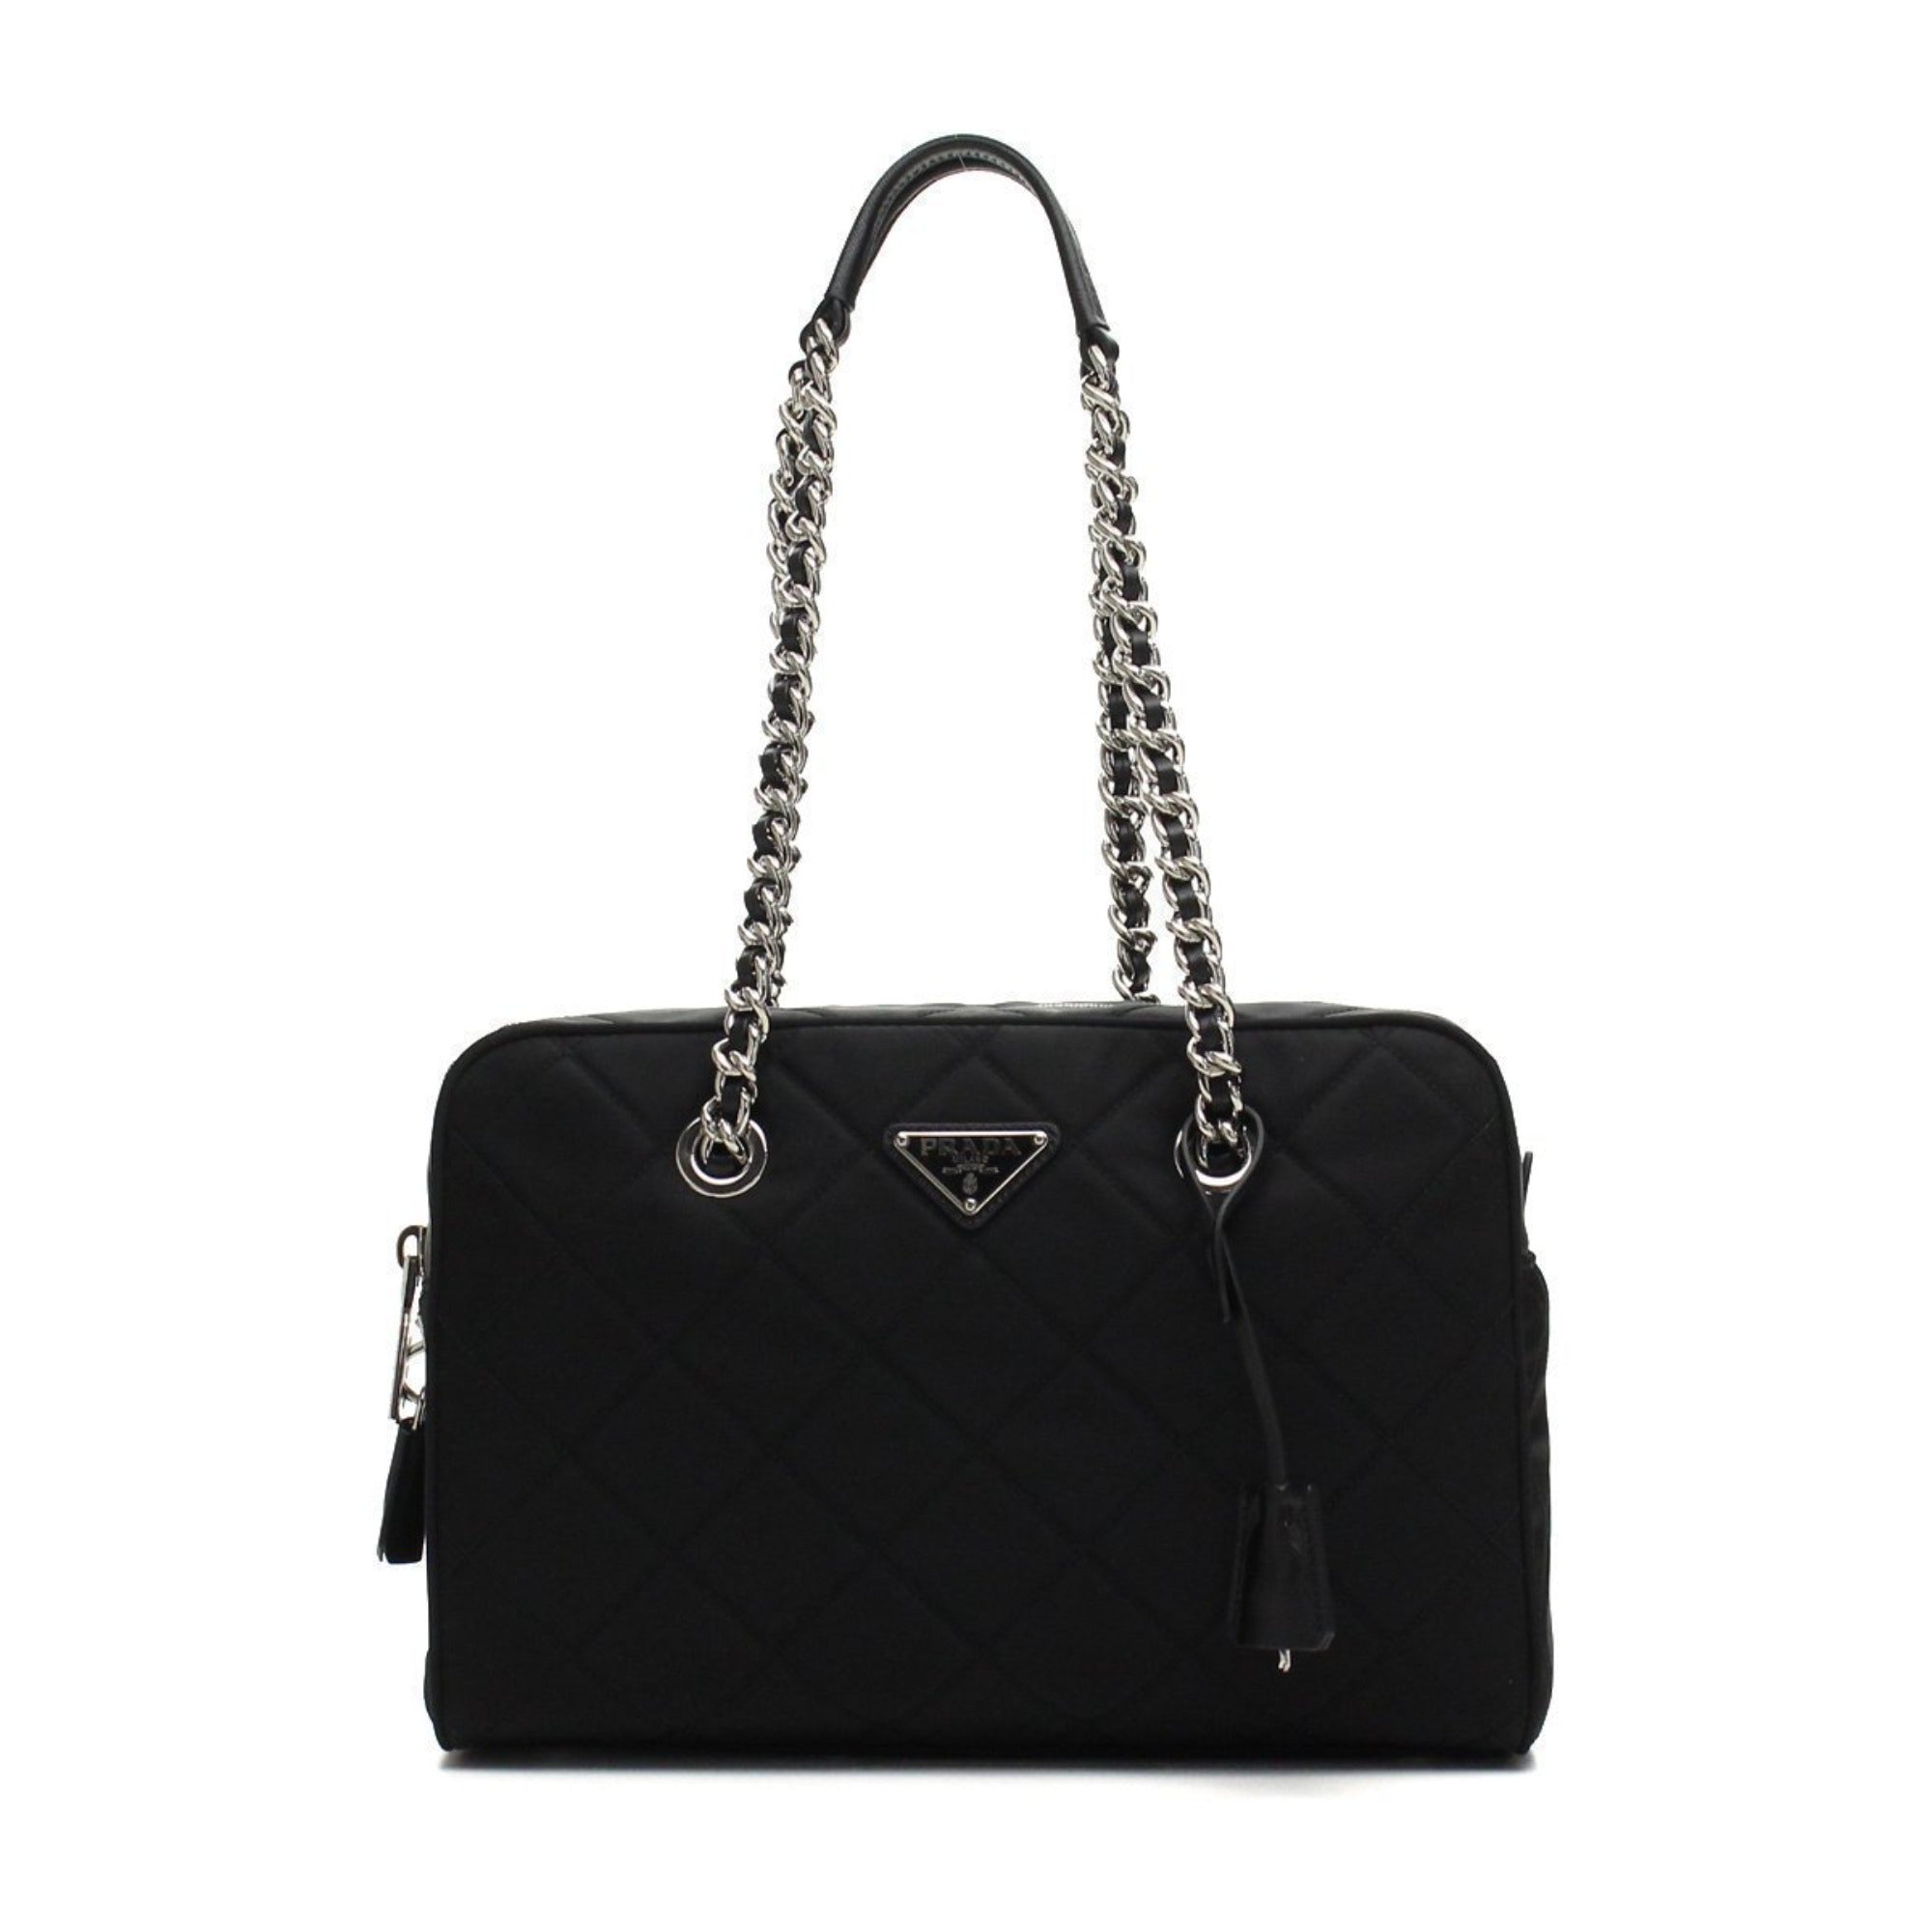 Prada tote bag saffiano nylon black shoulder bag TopHandle Bag Men's  Accessories | eBay